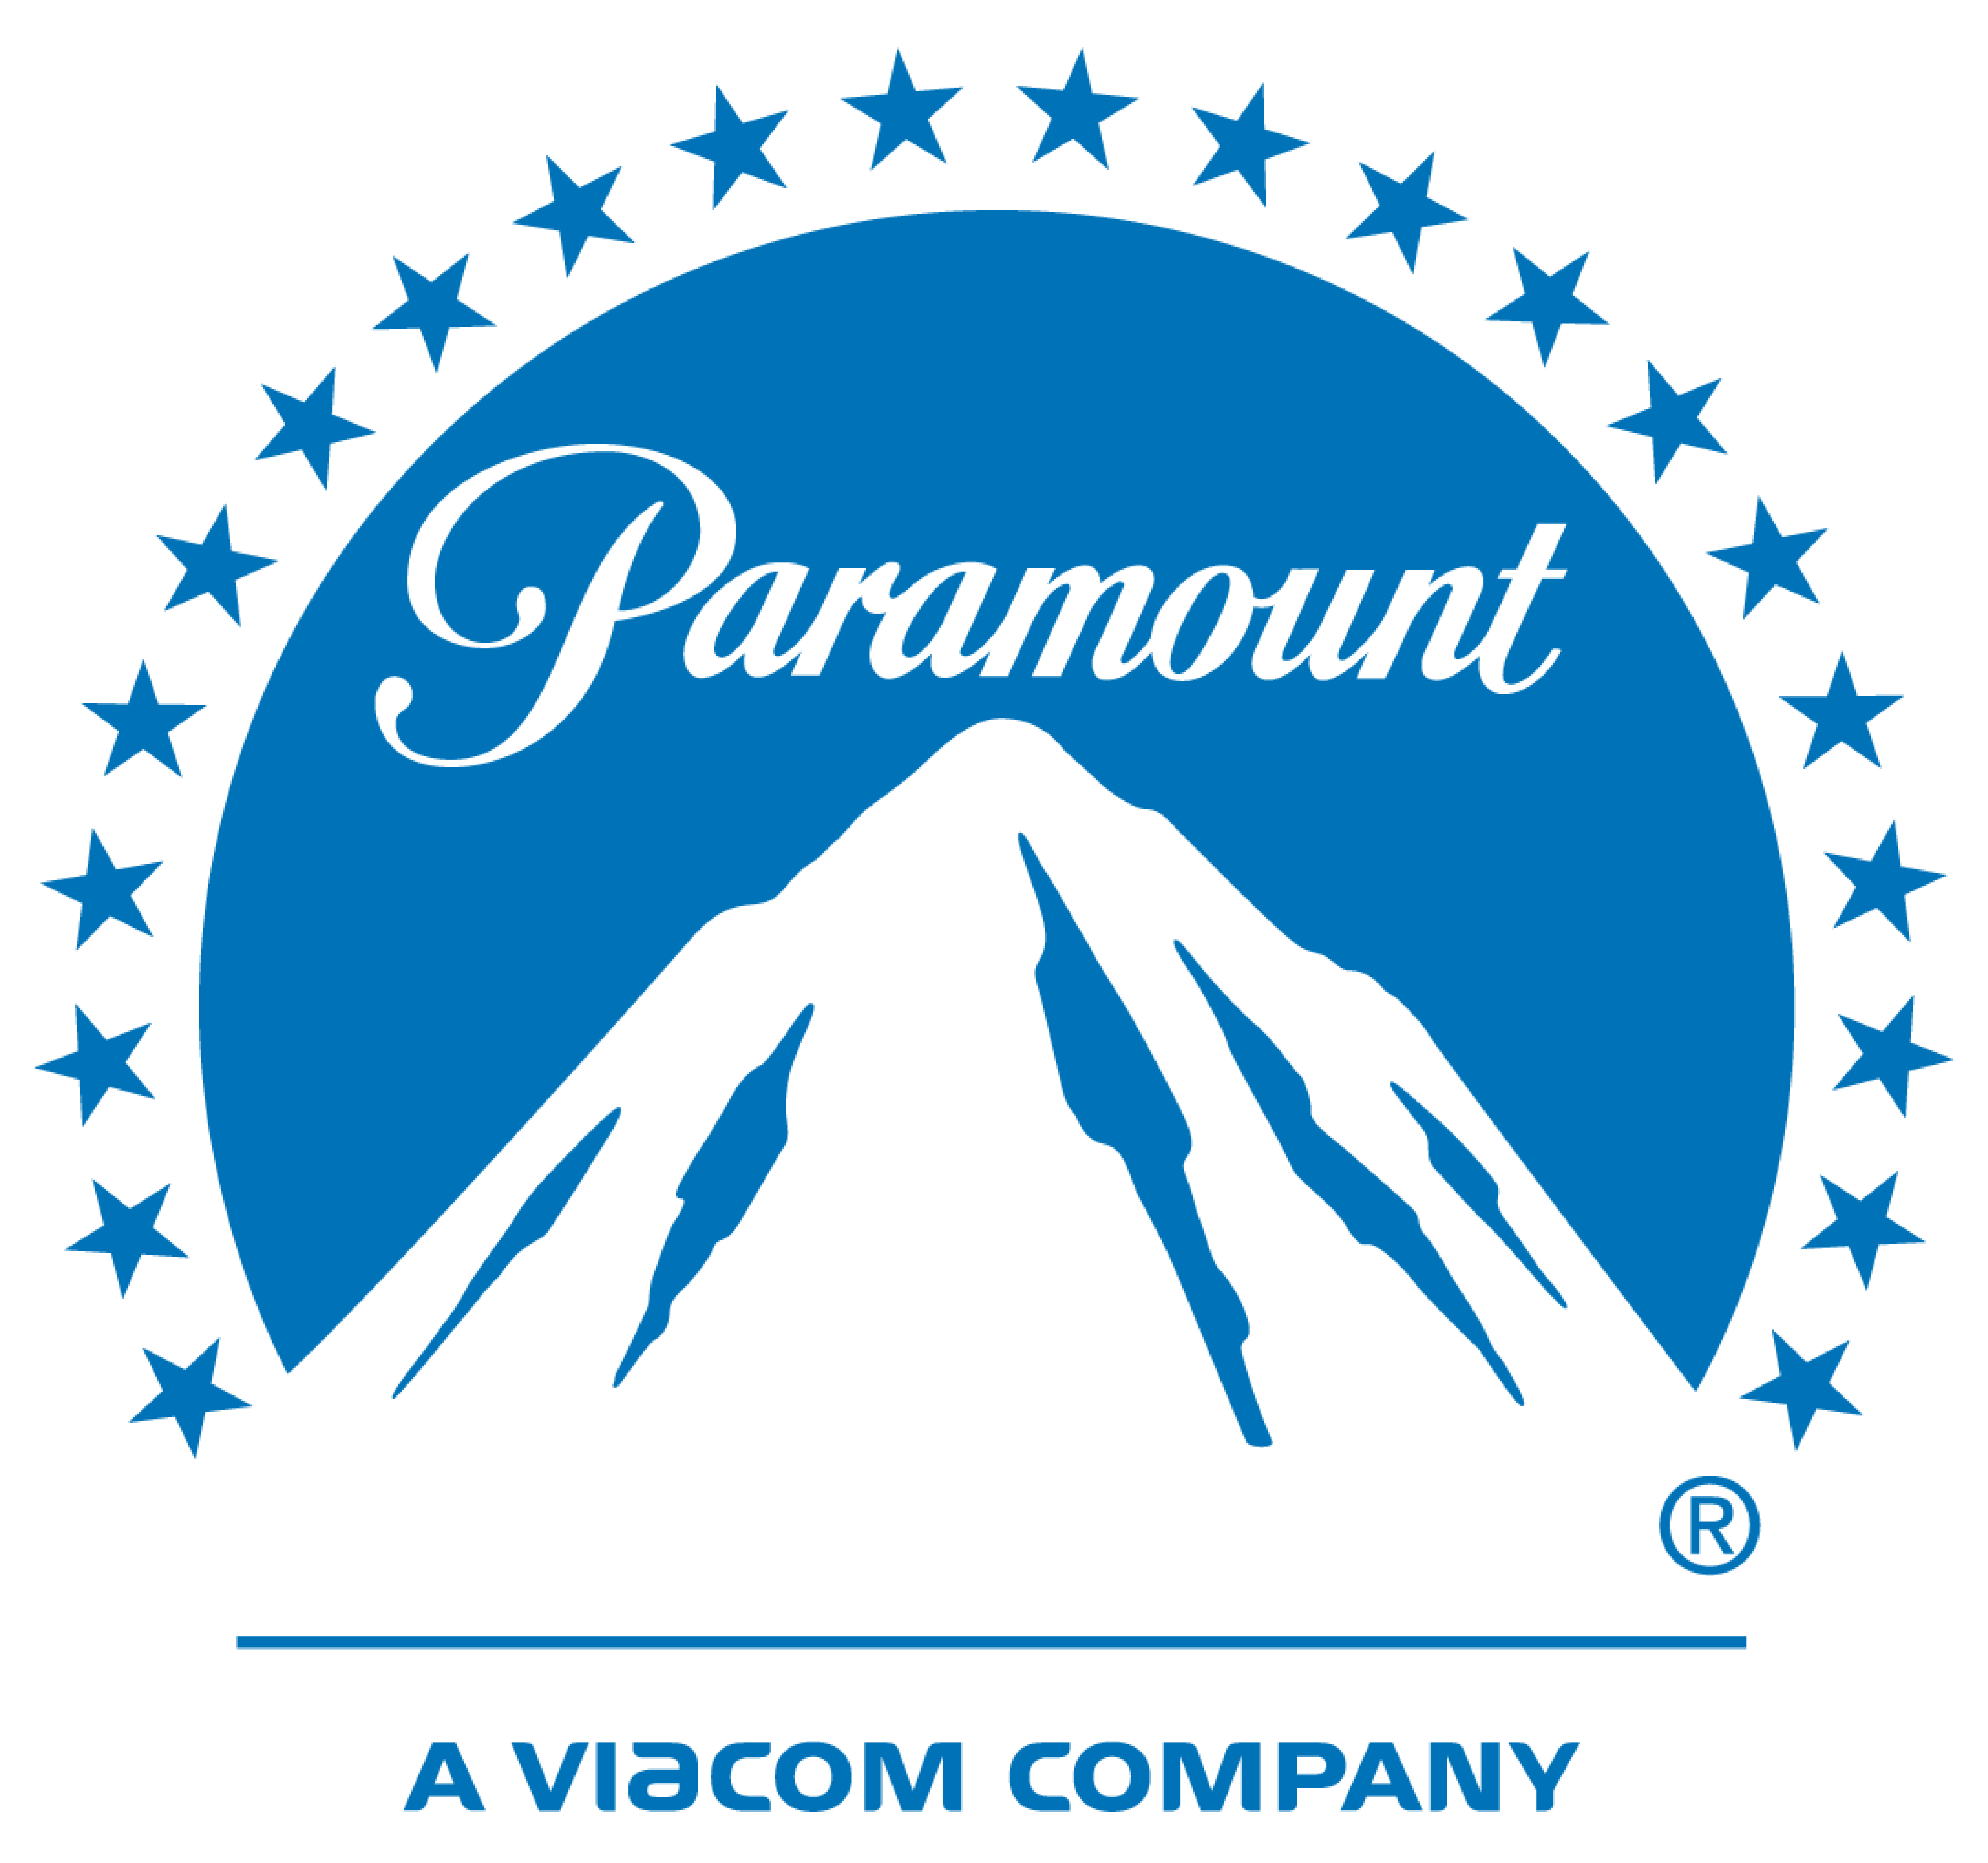 Paramount-AViacomCo Logo